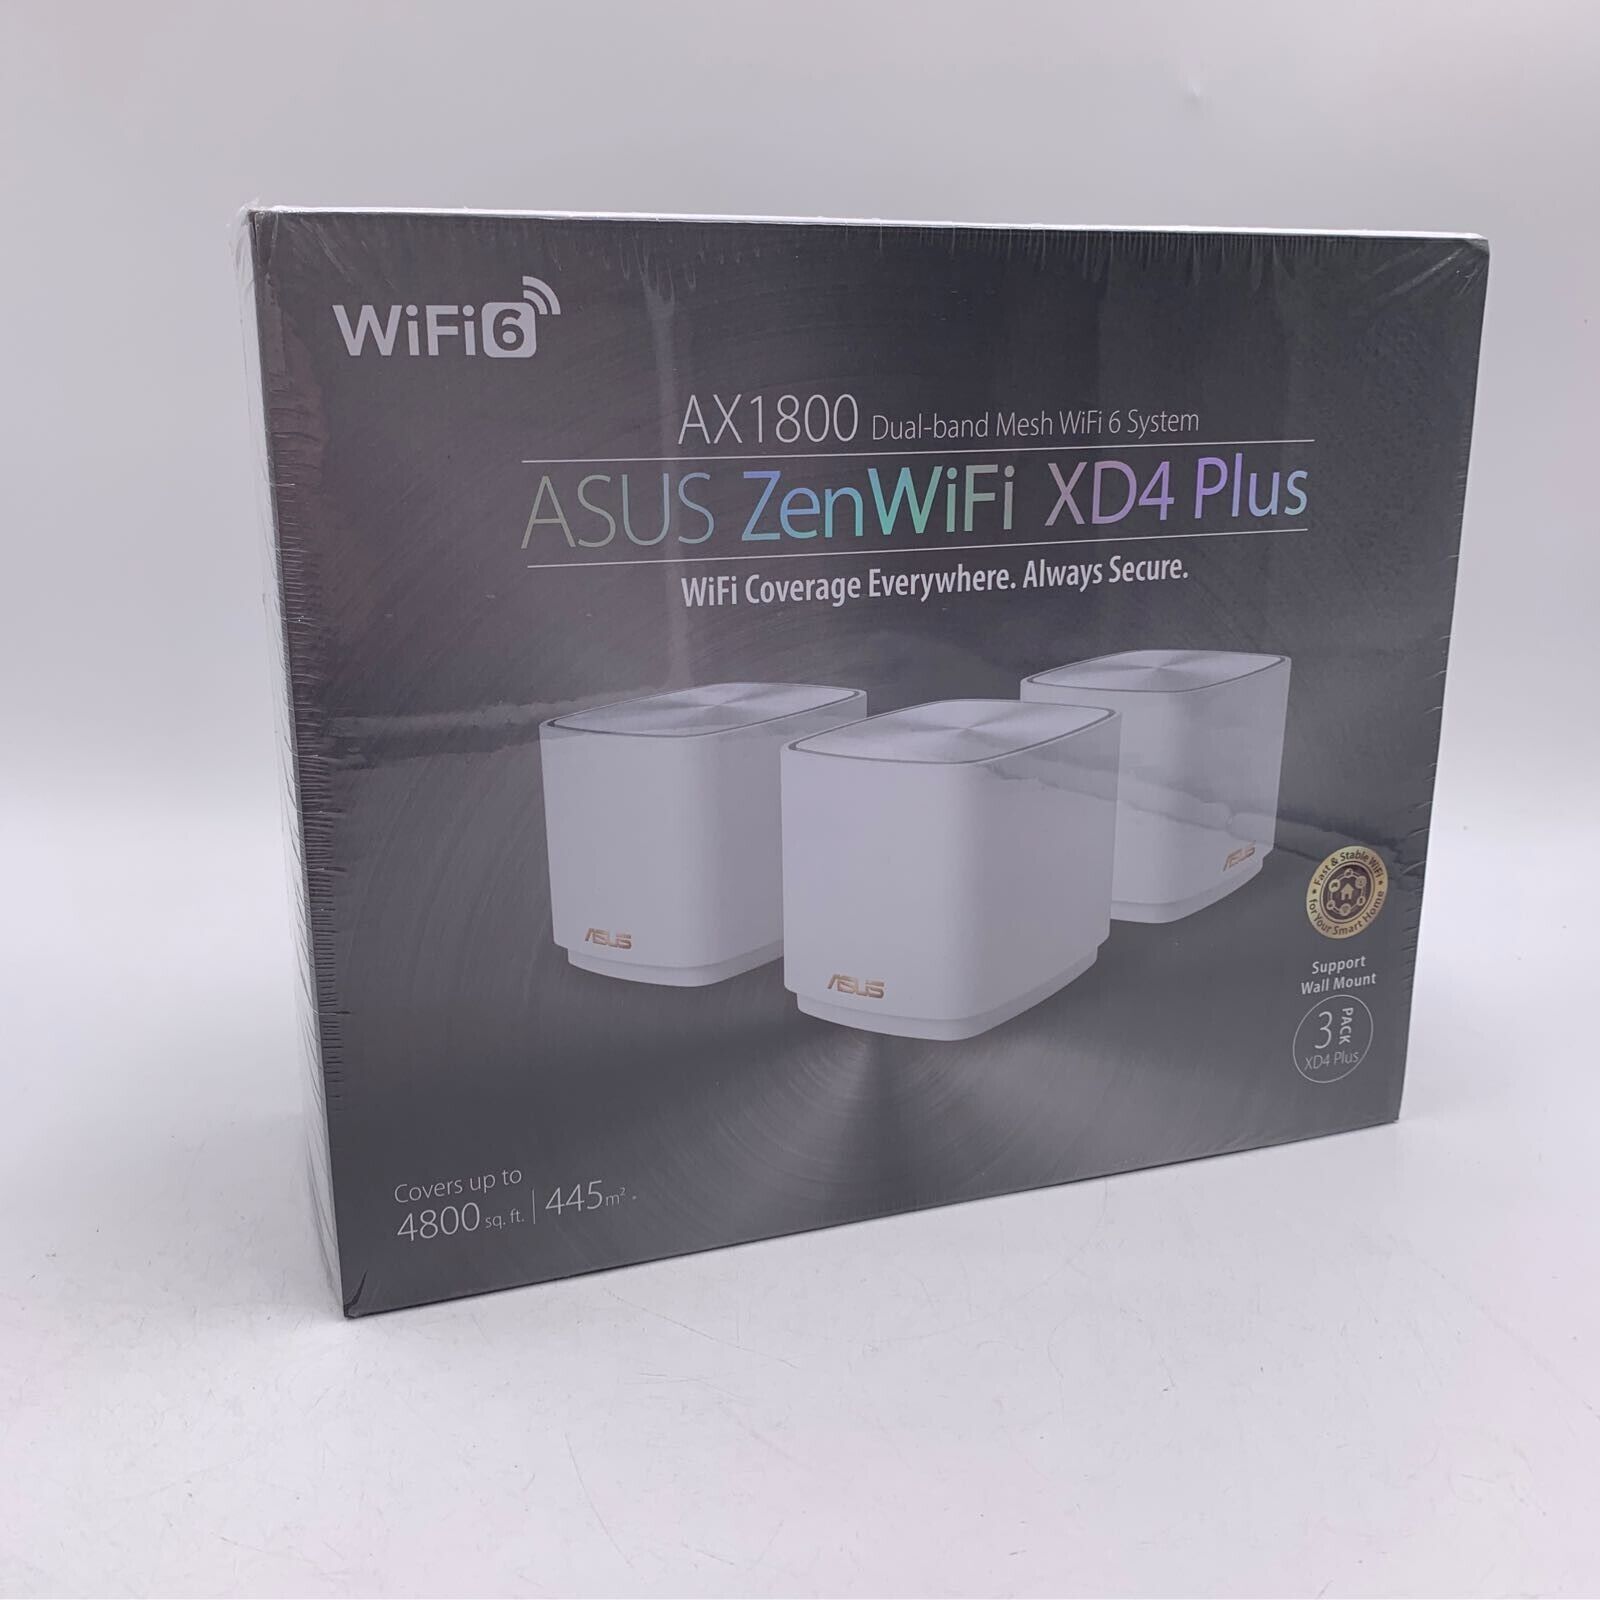 ASUS ZenWiFi XD4 Plus AX1800 Dual-band Mesh WiFi 6 AiMesh System